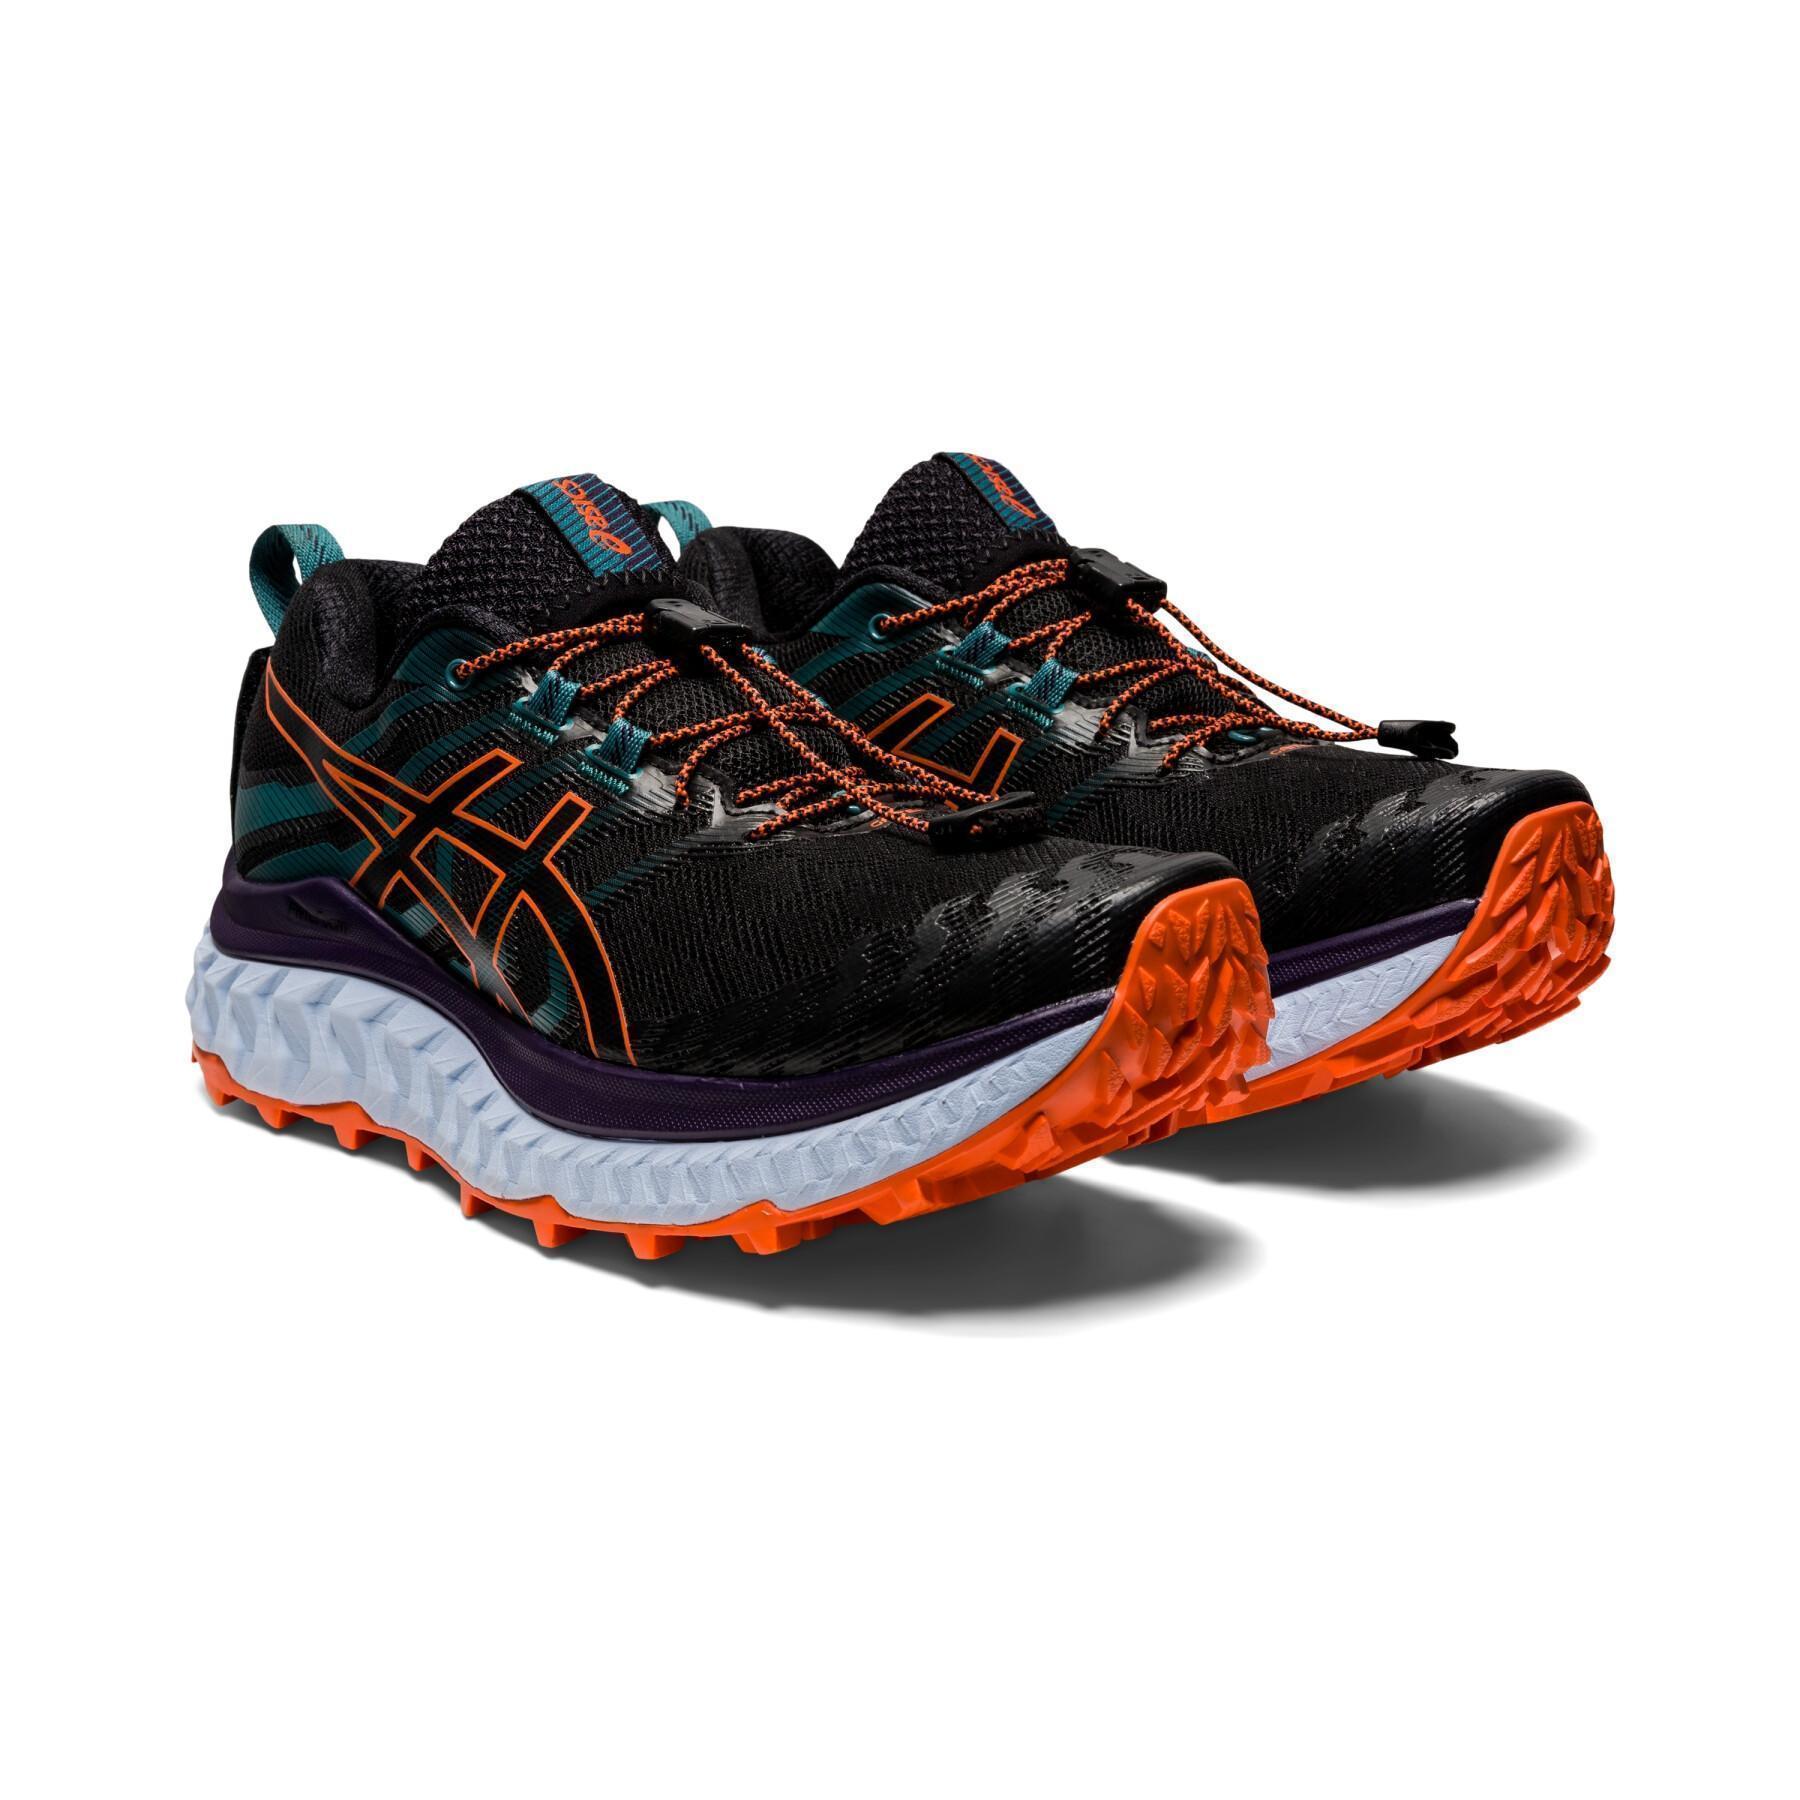 Women's Trail running shoes Asics Trabuco max